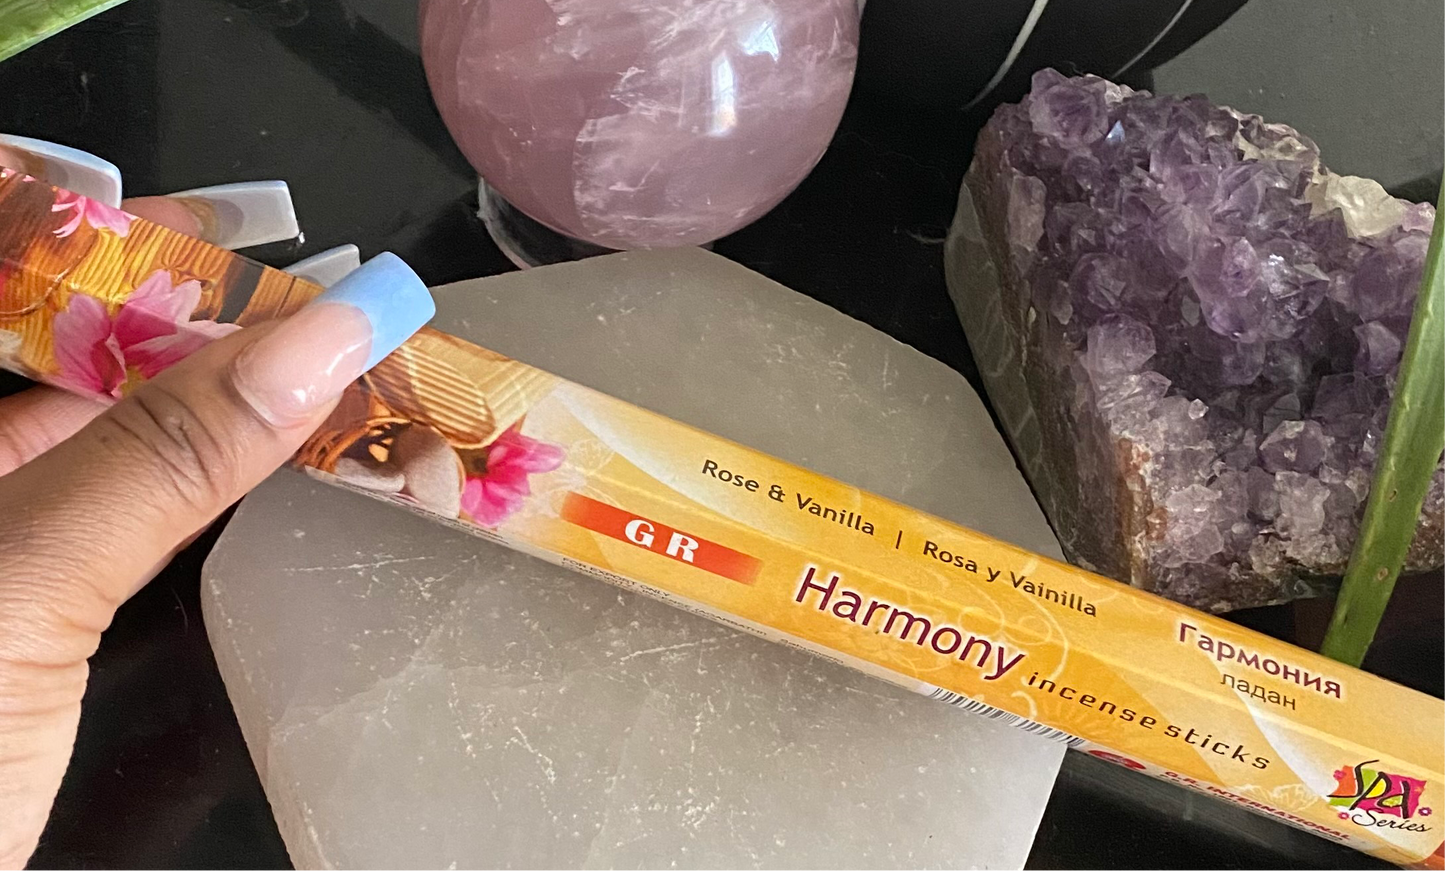 Harmony incense